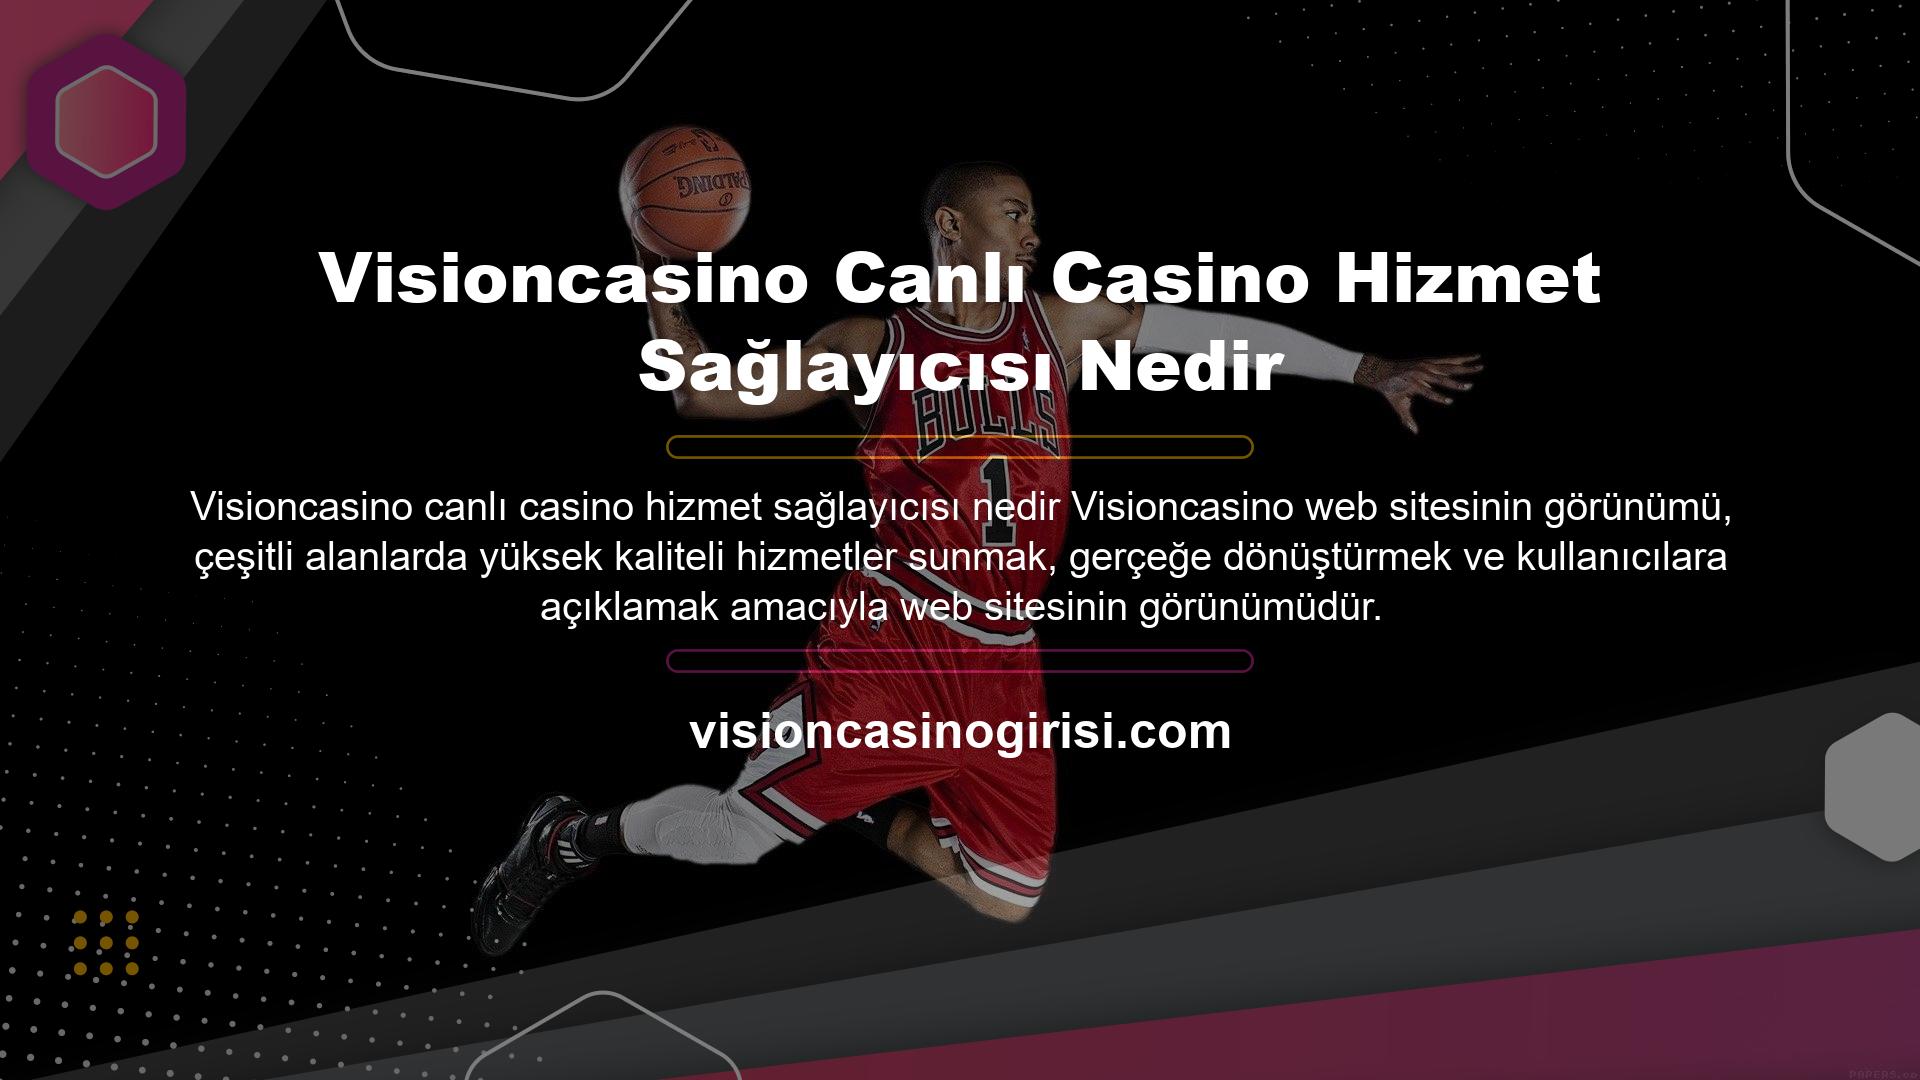 Visioncasino canlı casino hizmet sağlayıcısı nedir